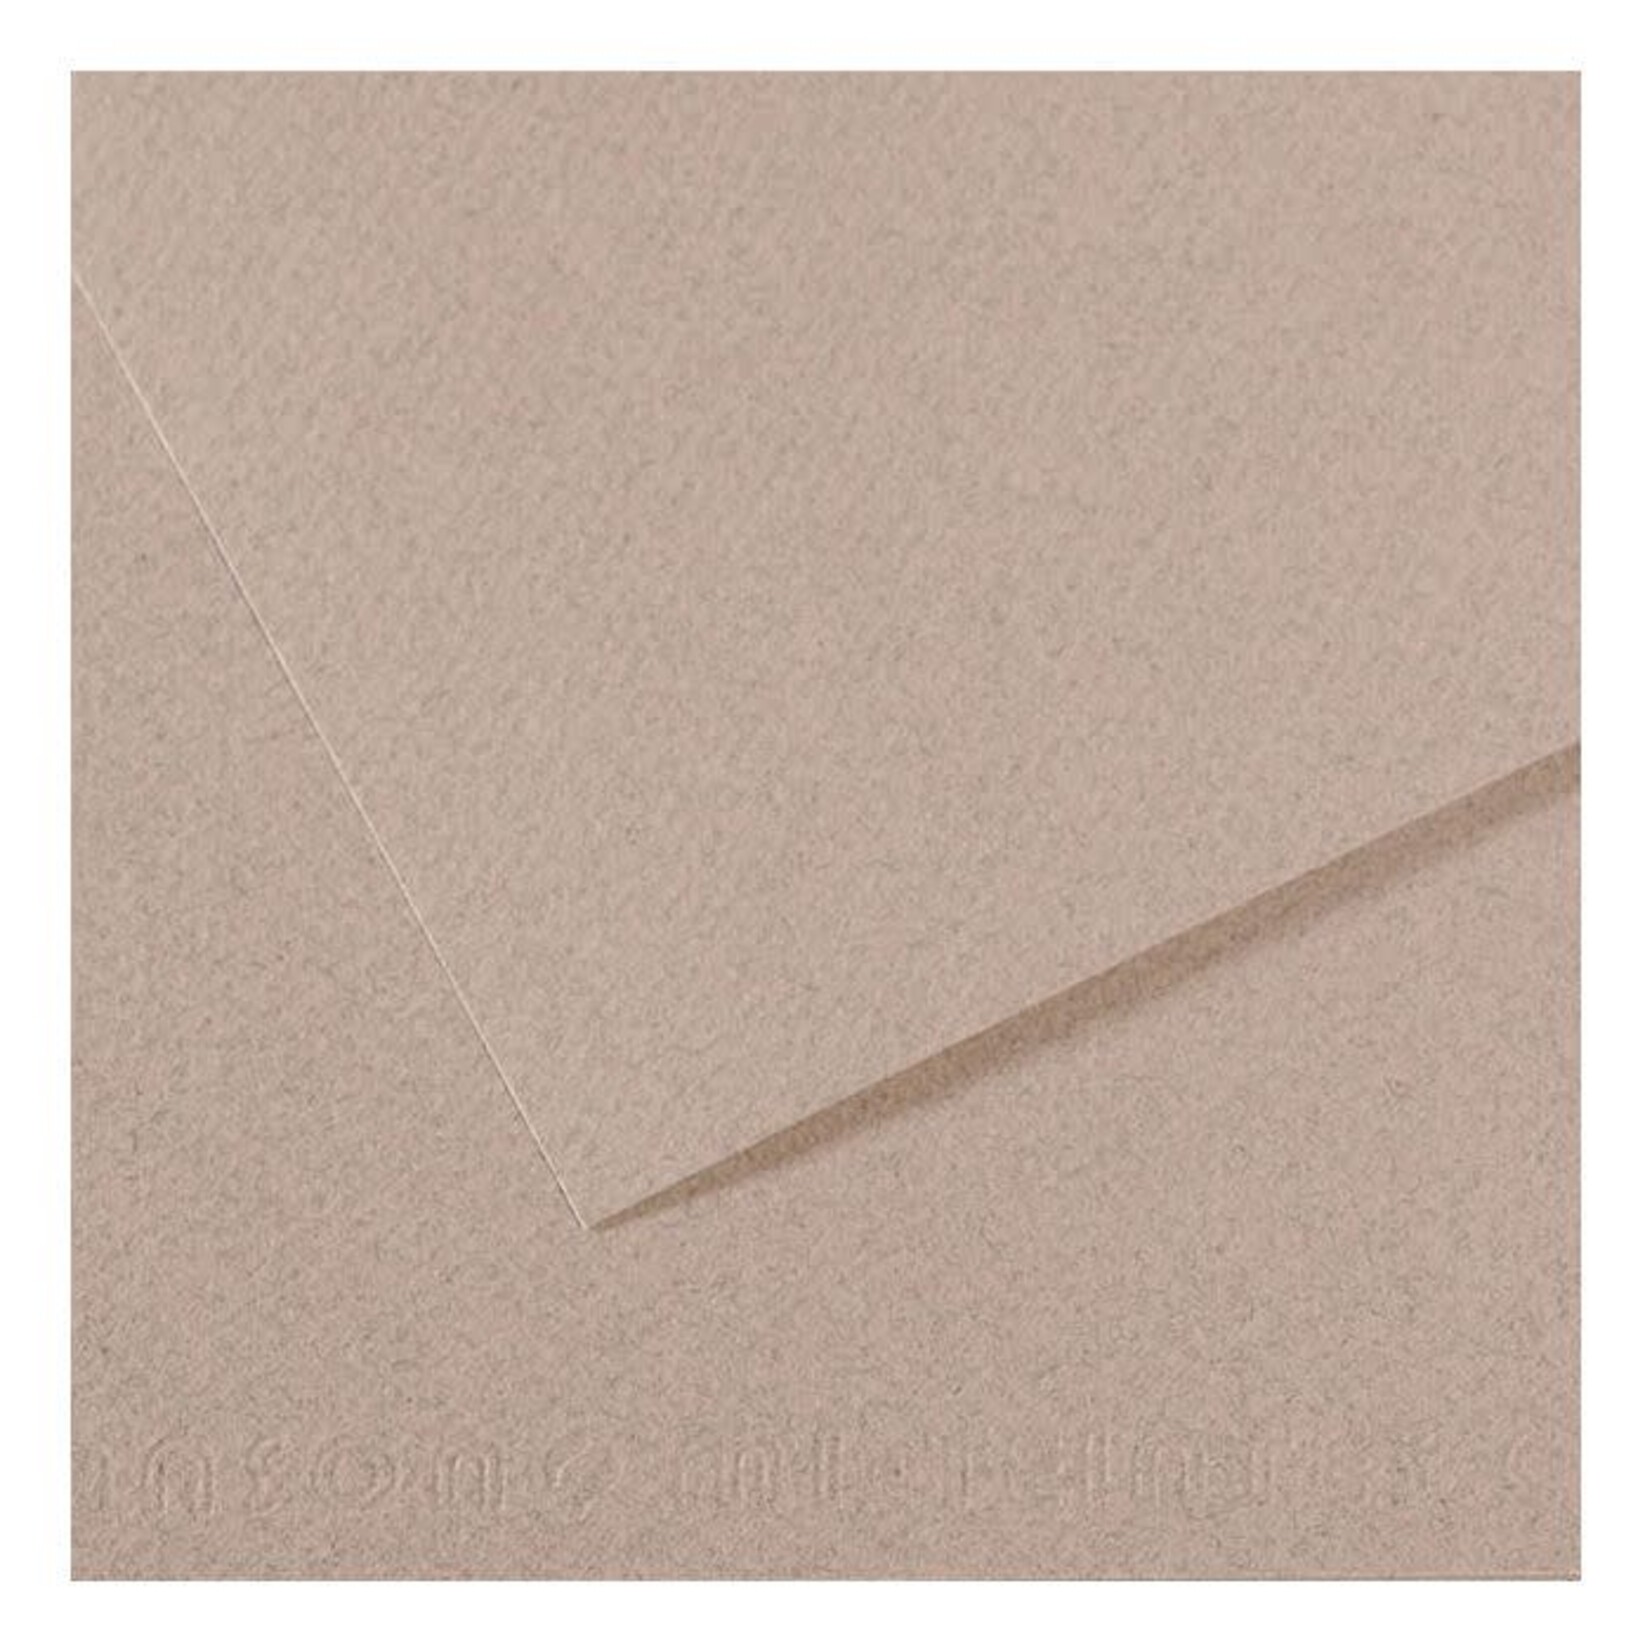 Canson Mi-Teintes Paper Sheets, 19'' x 25'', Moonstone